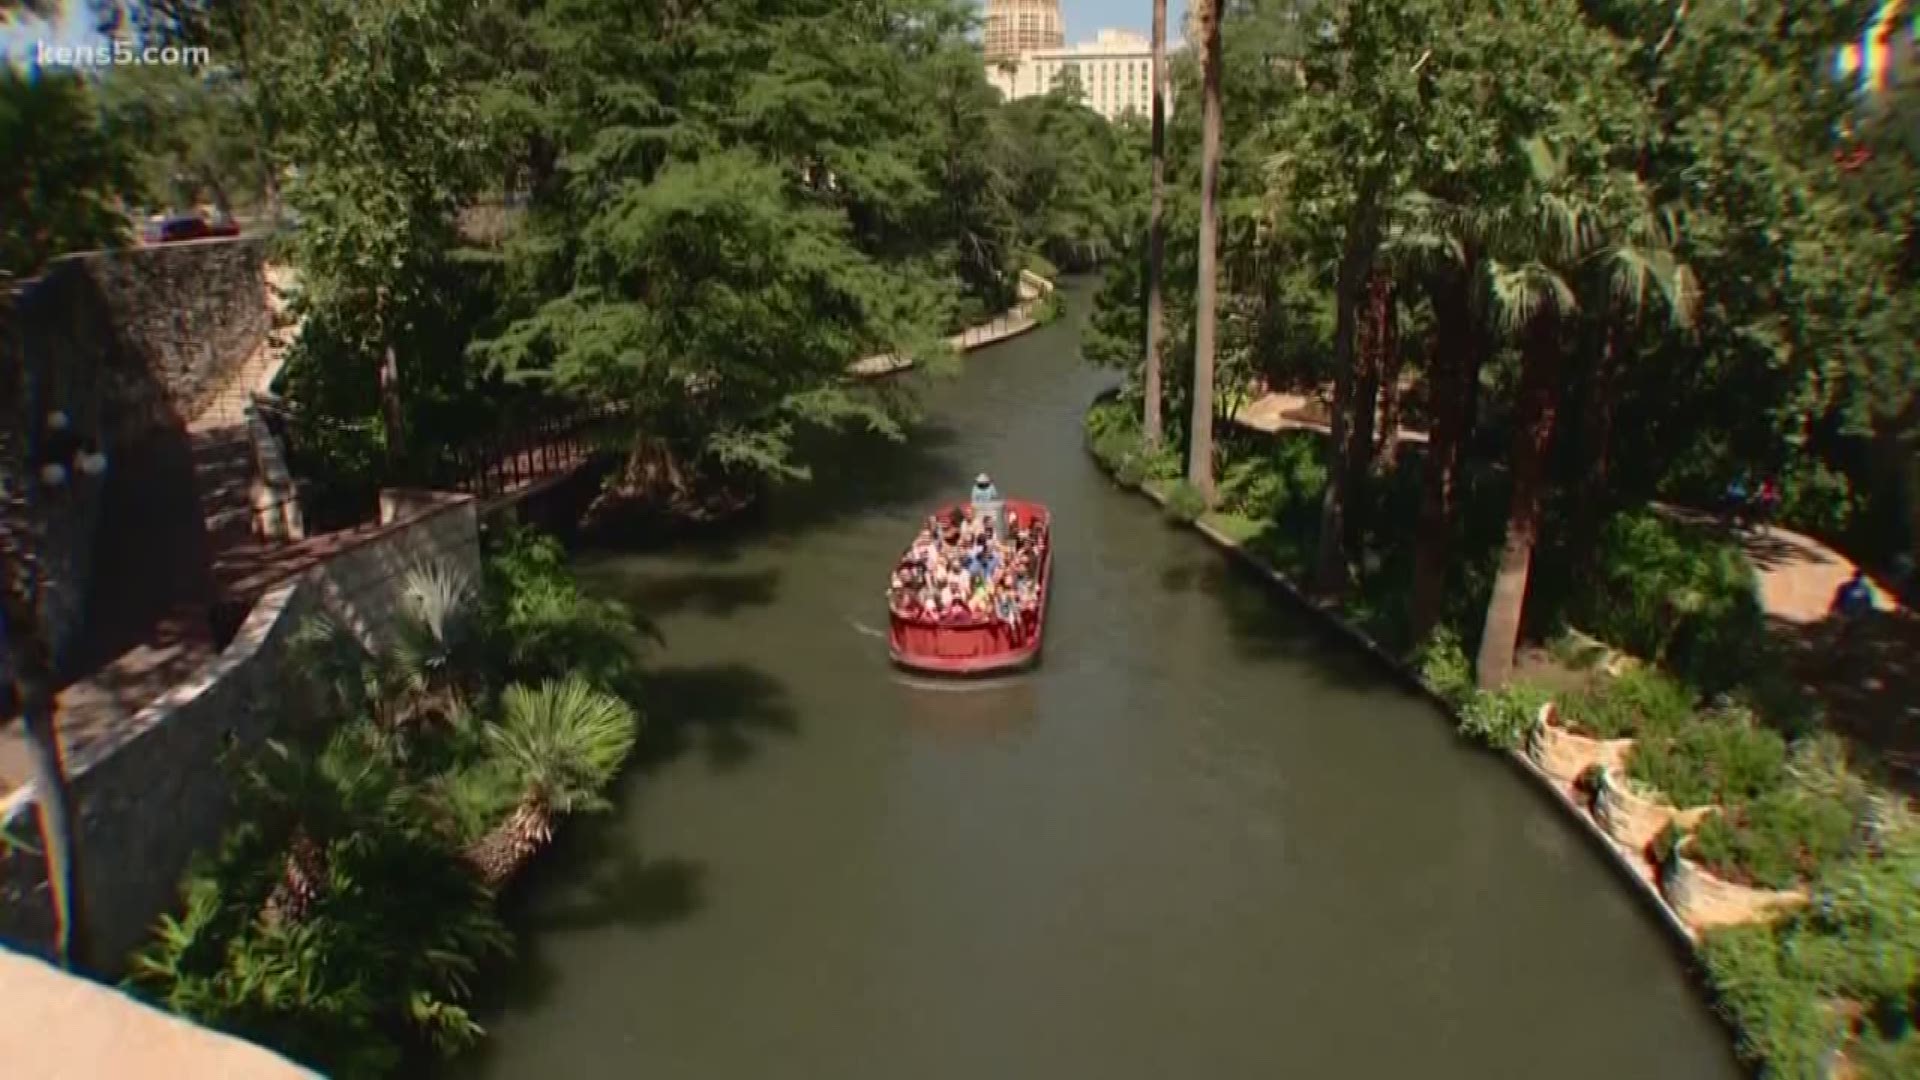 KENS 5's Barry Davis explores the Go Rio tourist cruises on the famous San Antonio River Walk.